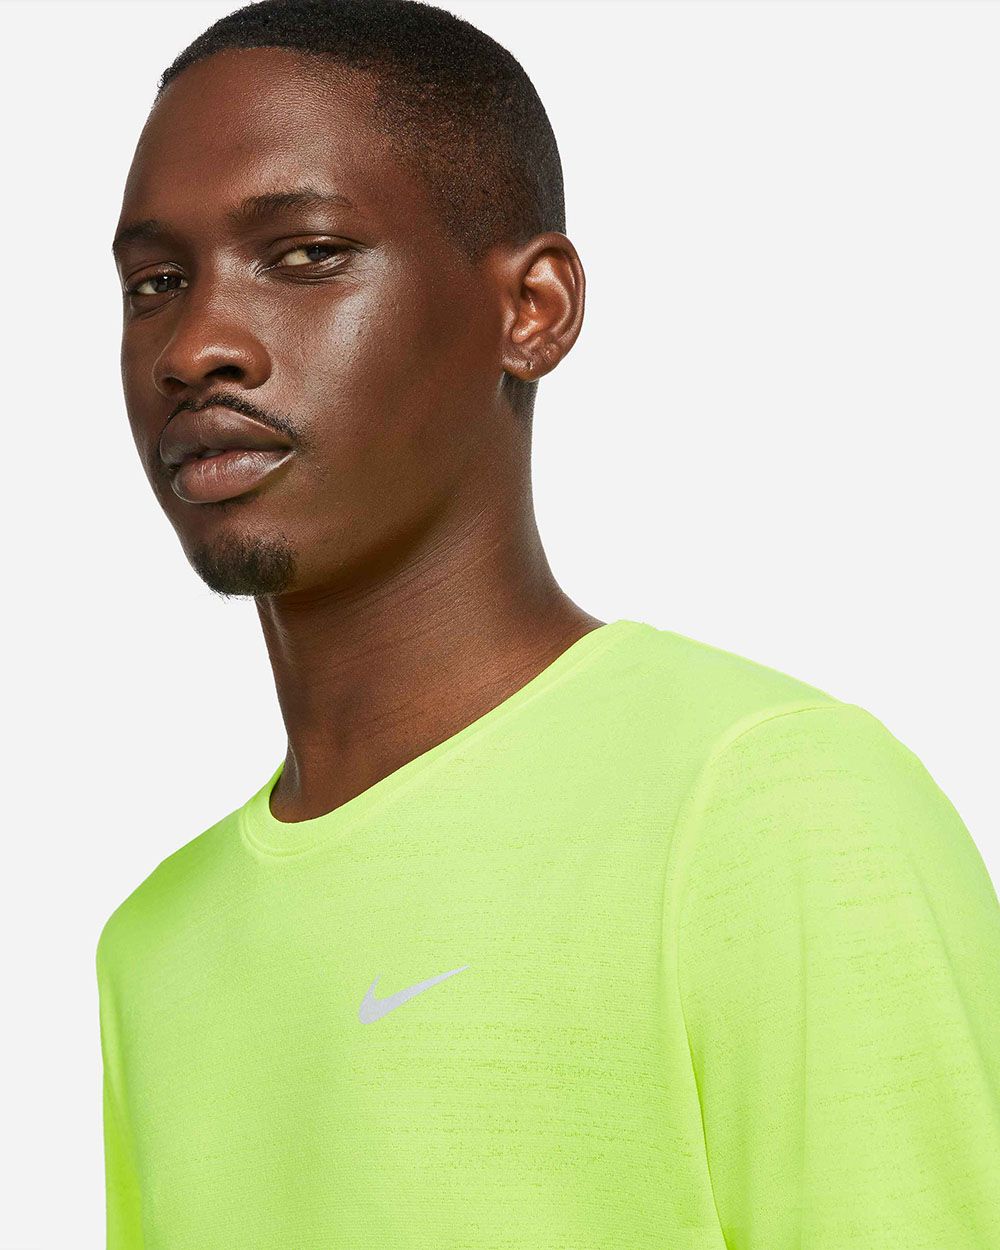 Nike Miler - Jaune - T-shirt Running Homme